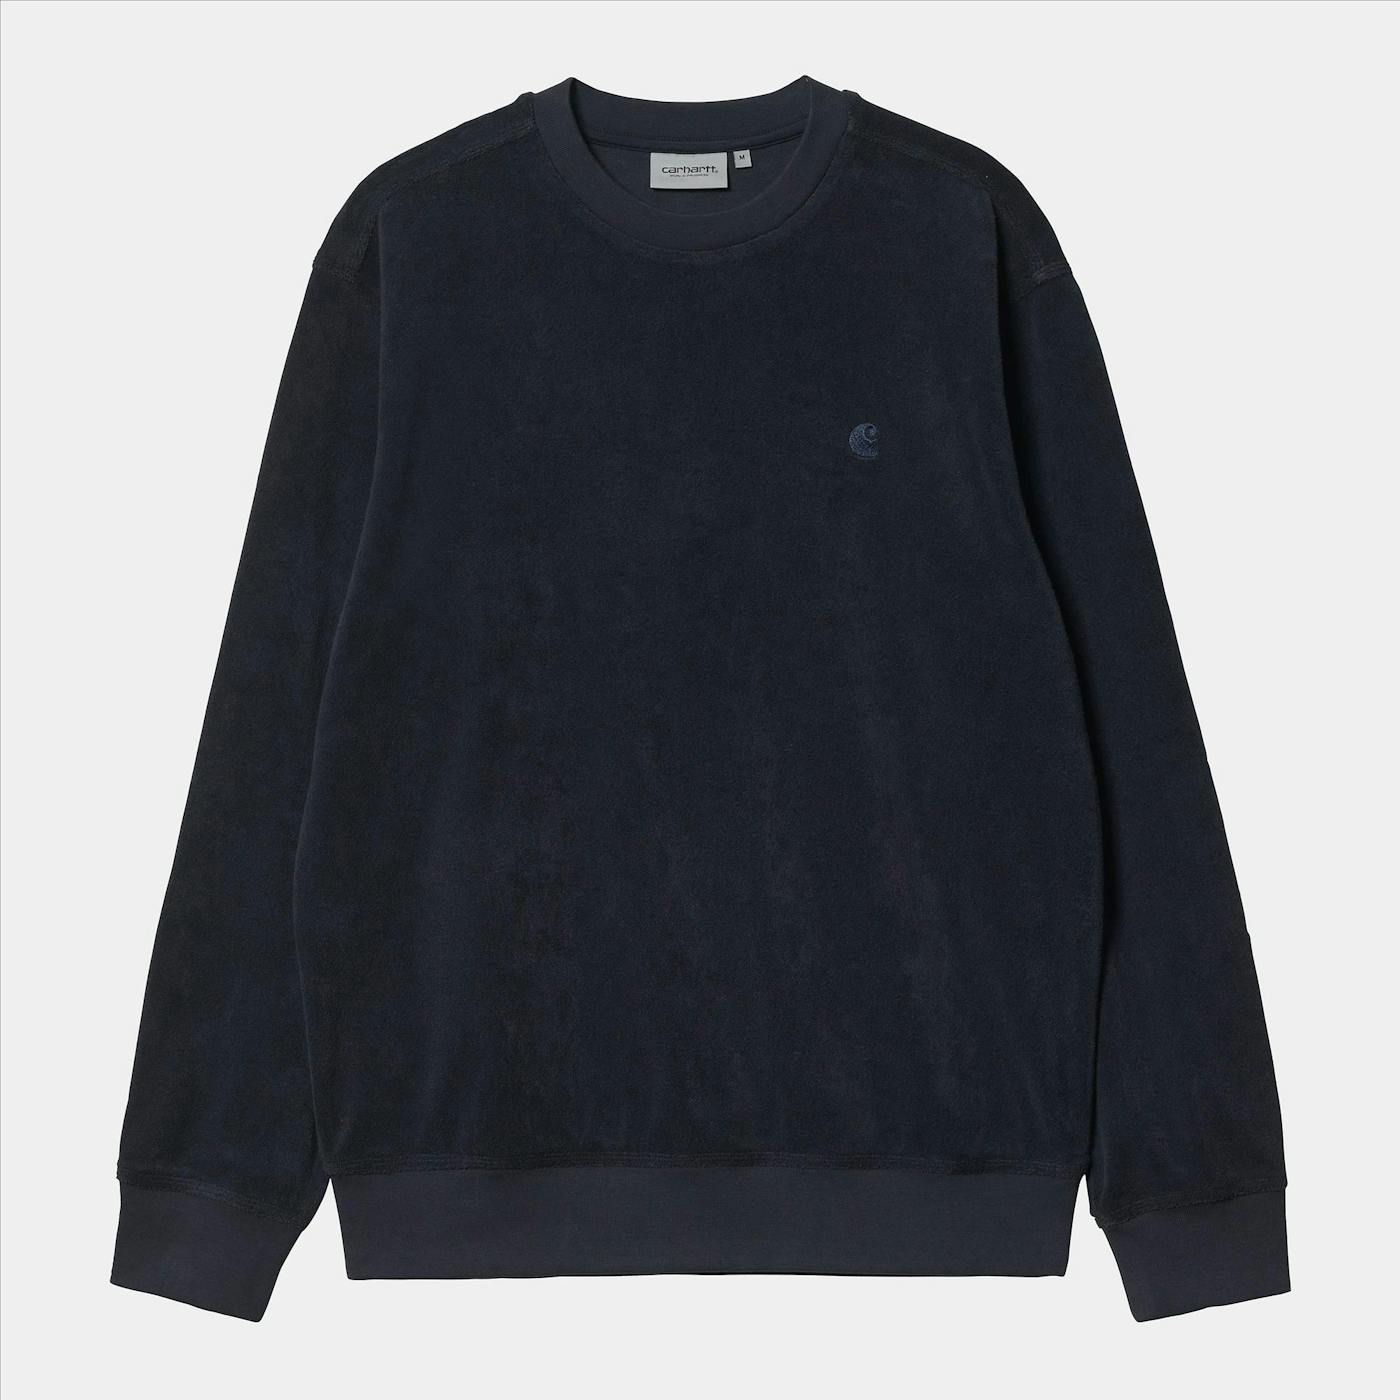 Carhartt WIP - Donkerblauwe Baylor sweater